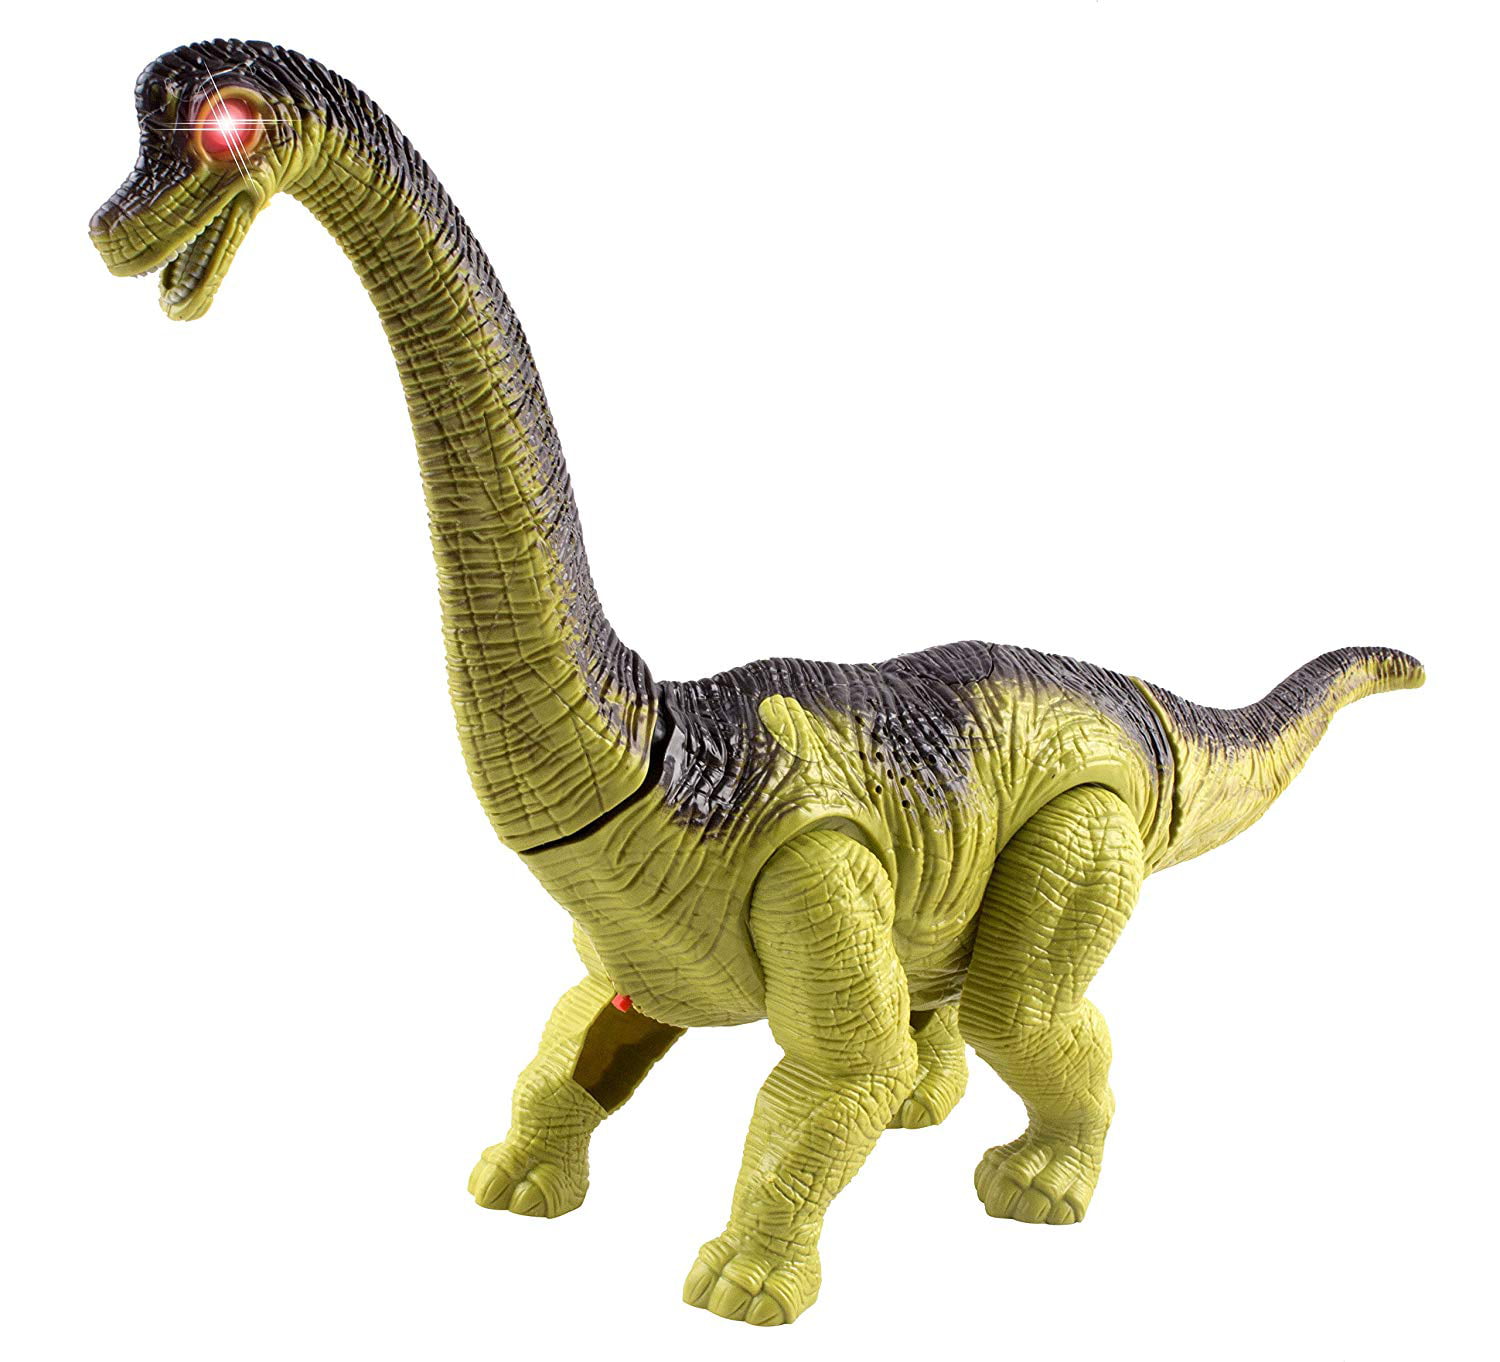 Shines Picture as it moves Hologram Kids Fun Walking Brachiosaurus Dinosaur 